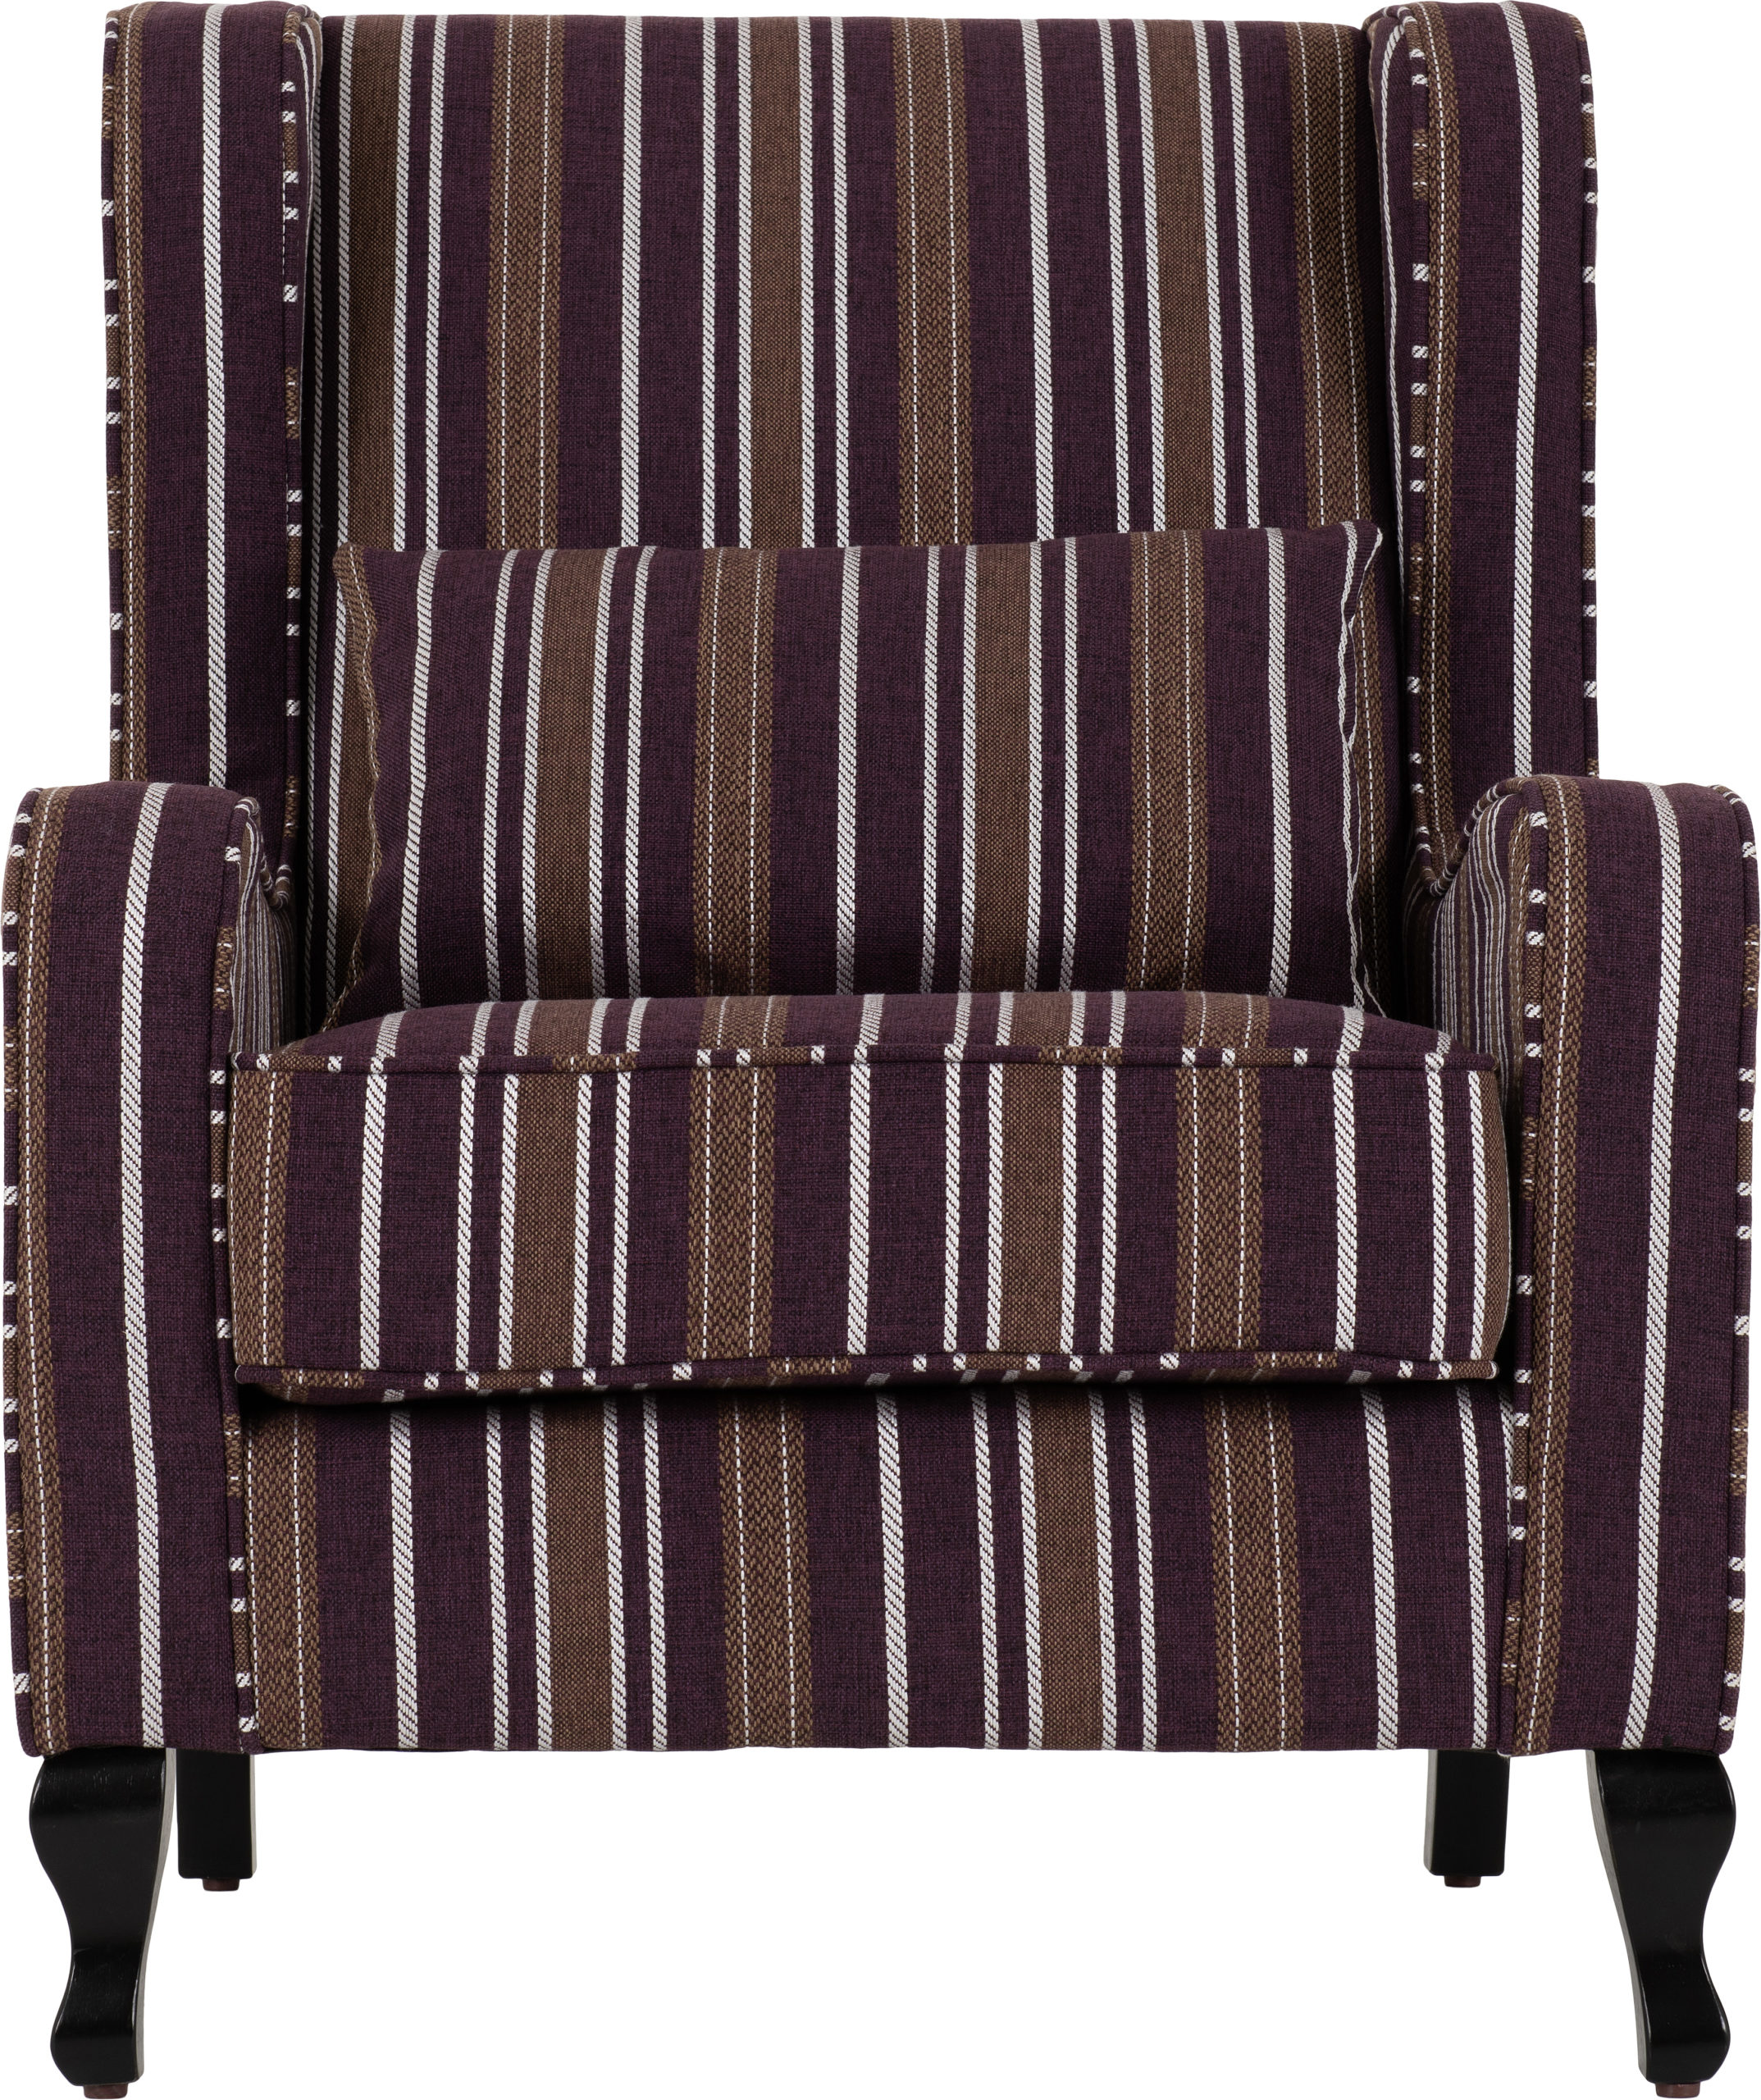 Seconique Sherborne Fireside Chair 889.95 x 769.95 x 889.95 cm Lace Beige Striped Fabric 